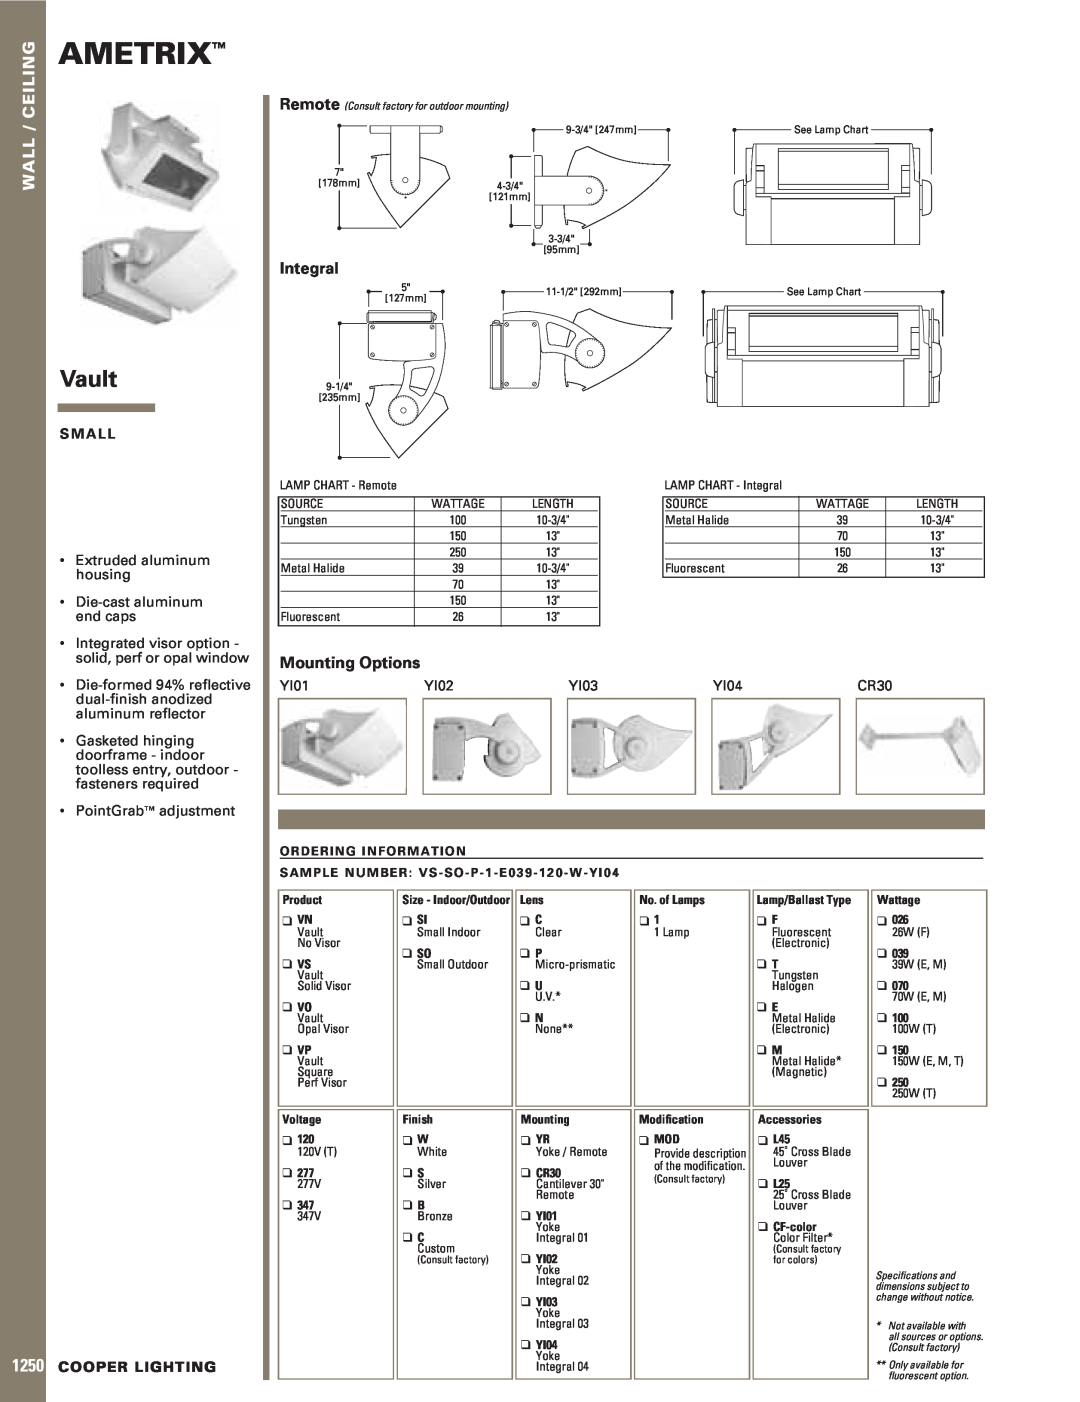 EdgeStar Vault specifications Ametrix, 1250, Wall / Ceiling, Integral, Mounting Options, S M A L L, Cooper Lighting 